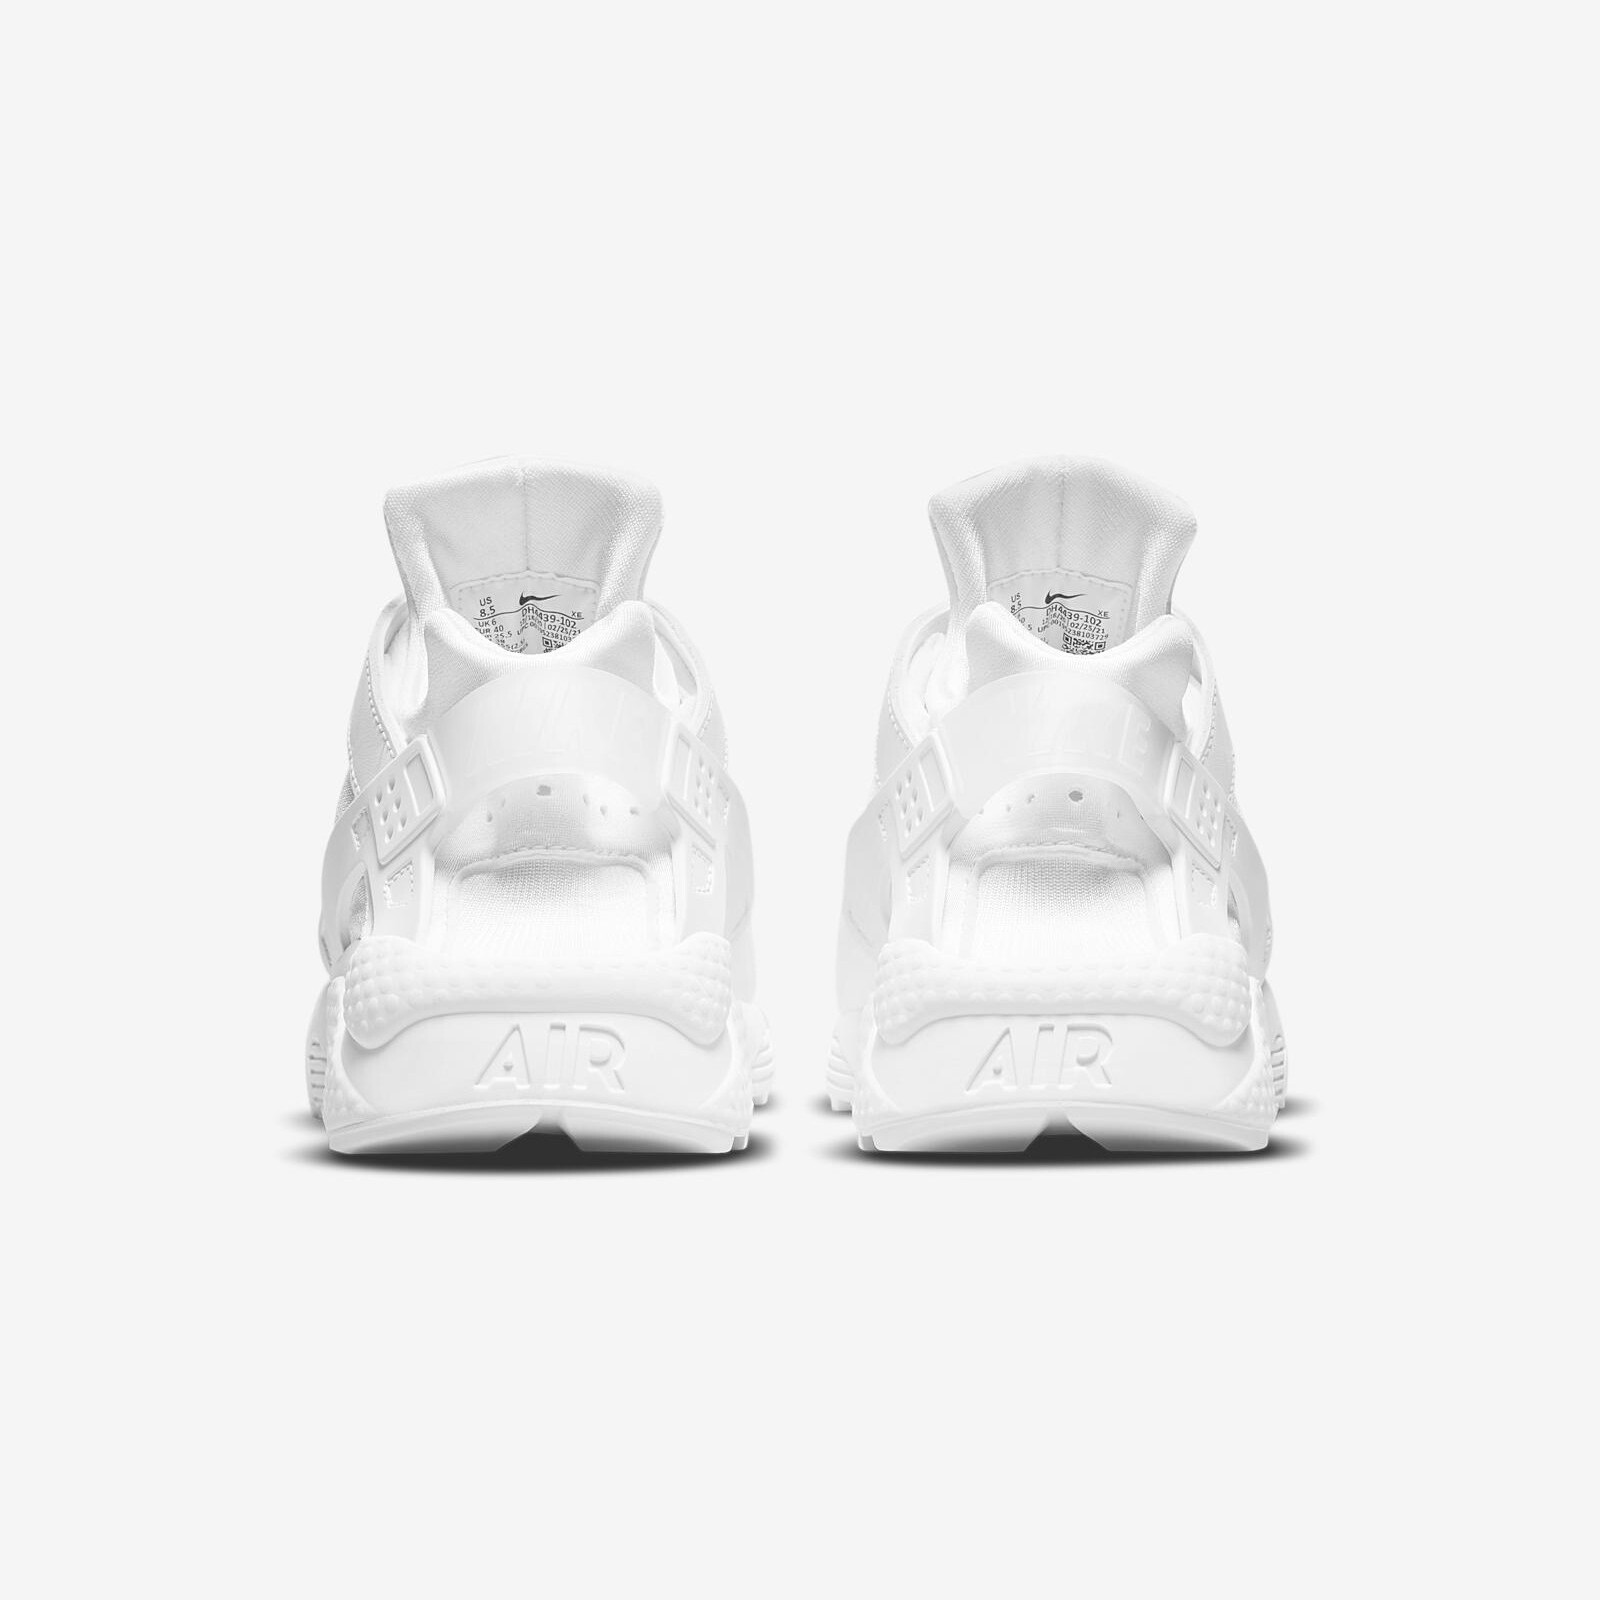 Nike Air Huarache
« Pure White »